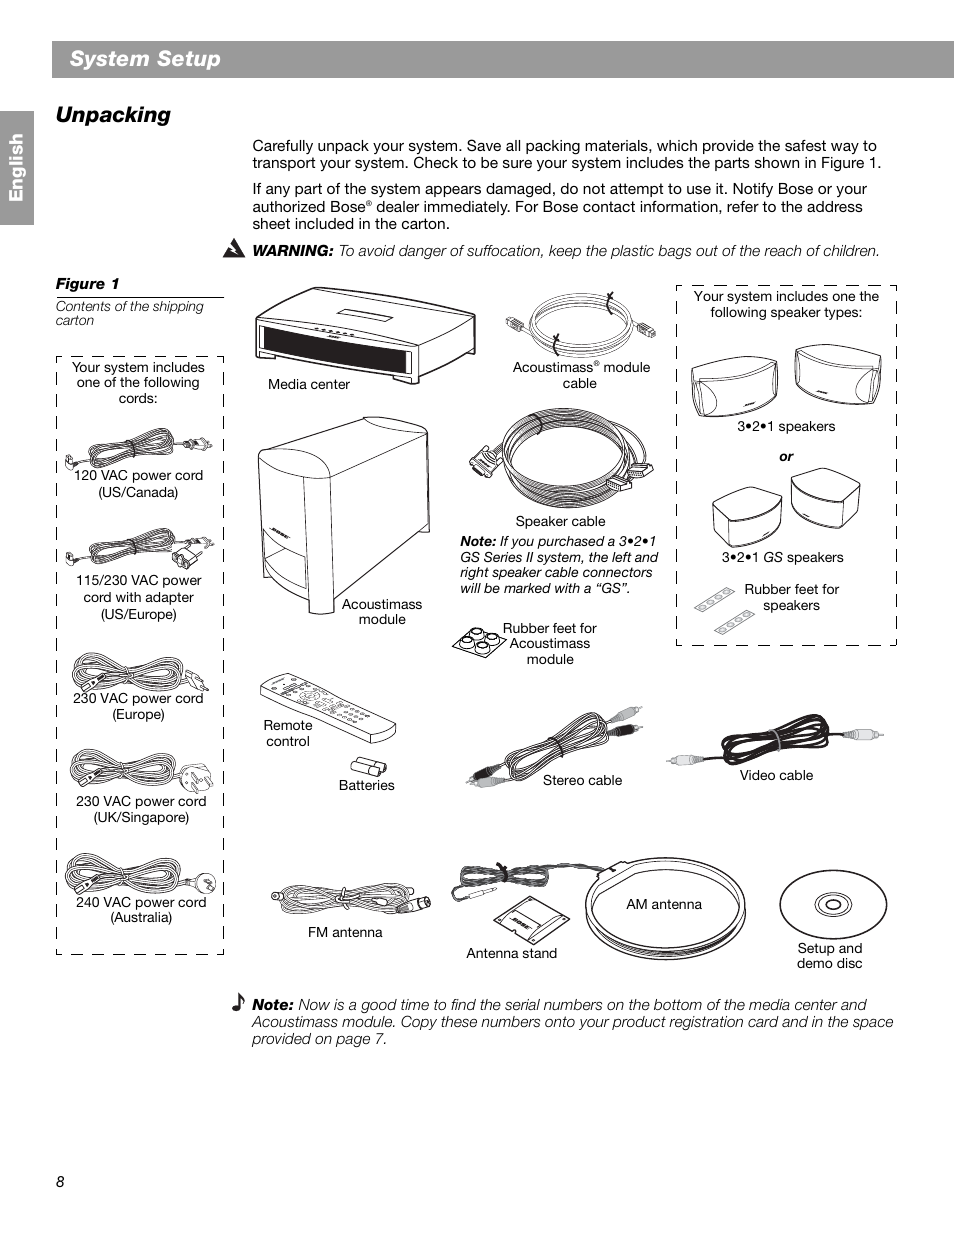 De er Nu lade System setup unpacking, En glis h | Bose 3.2.1 GS Series II User Manual |  Page 8 / 180 | Original mode